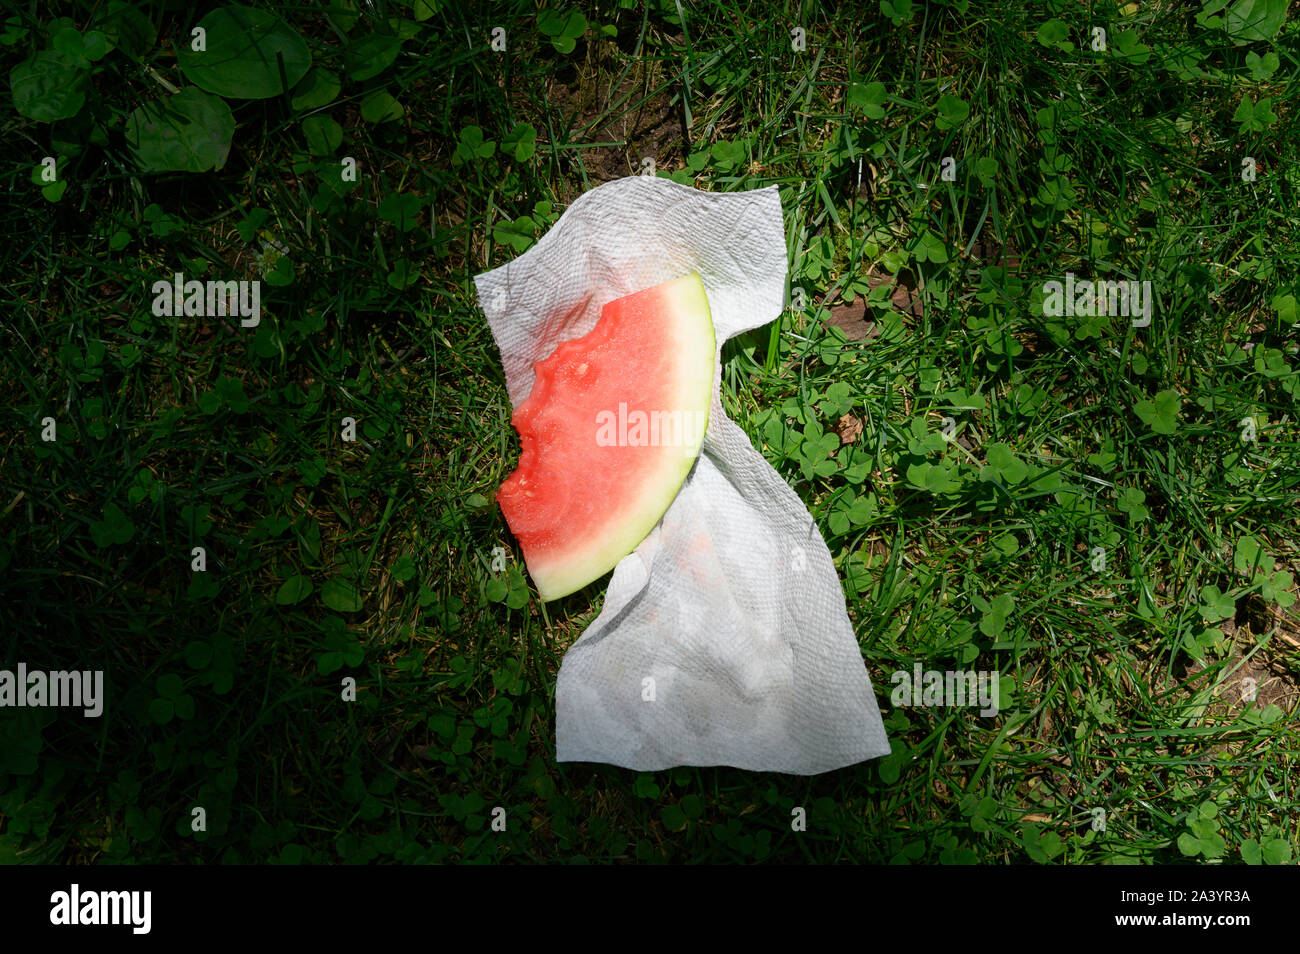 Slice of watermelon with napkin on grass Stock Photo